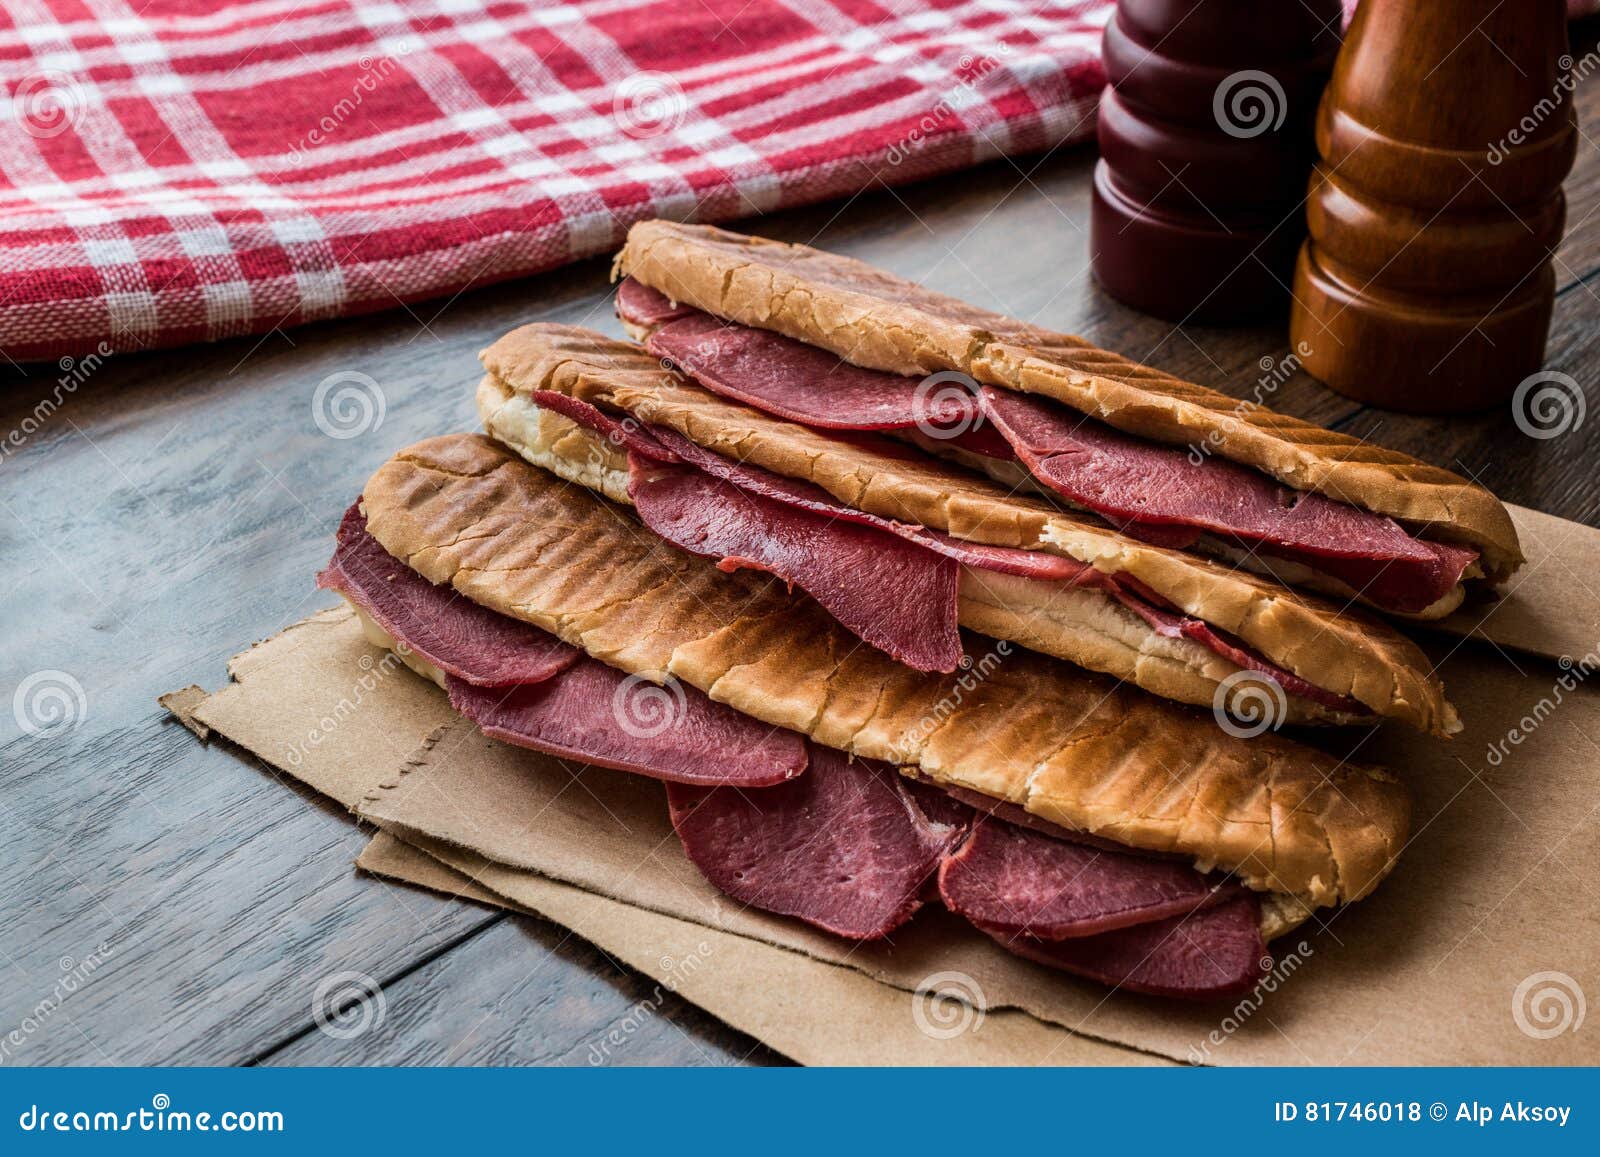 dilli kasarli / beef tongue sandwich